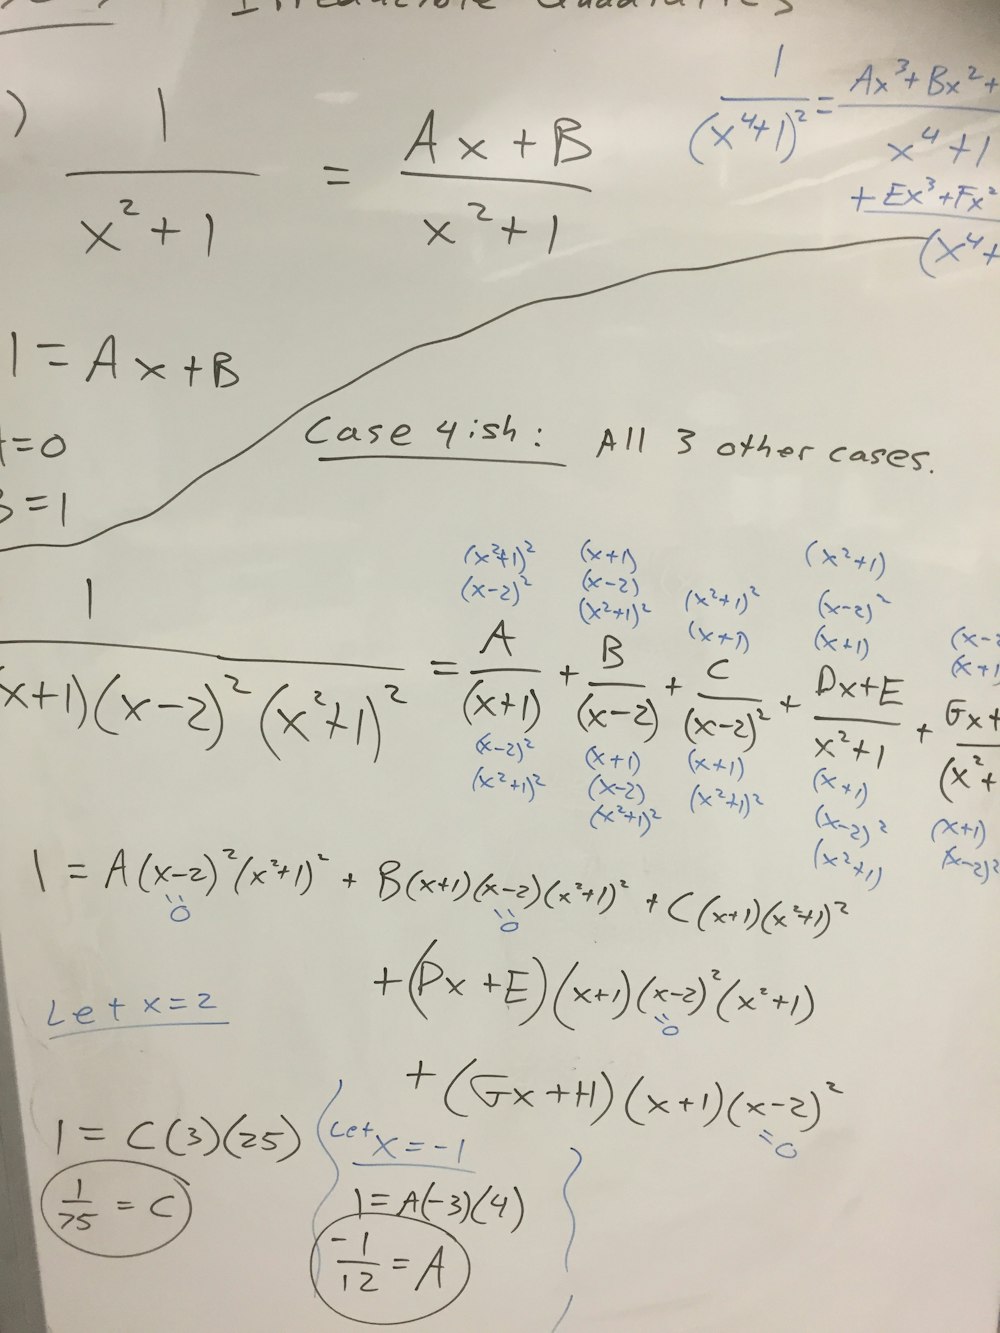 Algebra equations on a whiteboard.